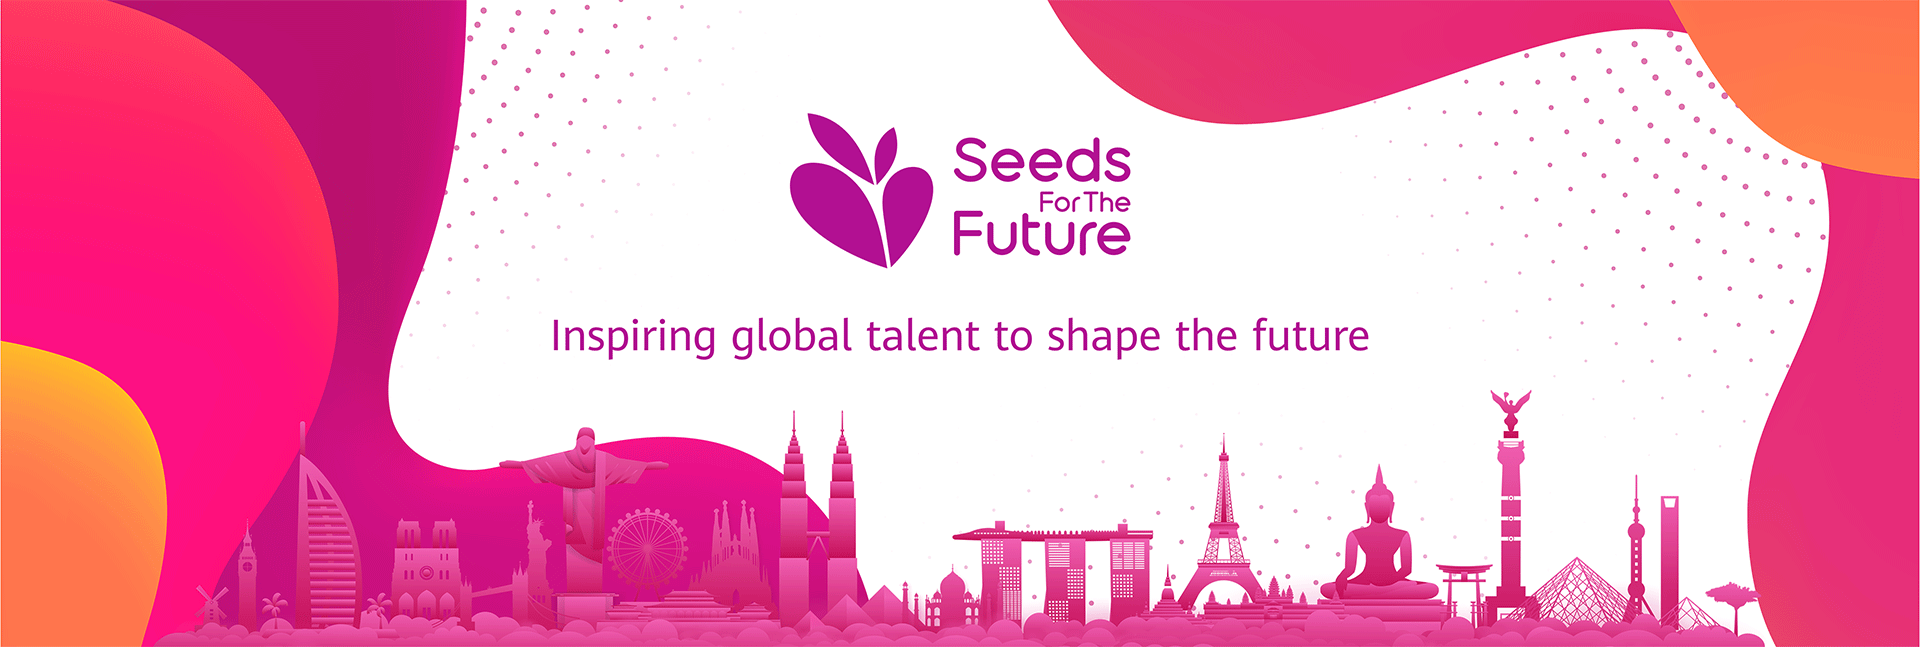 seeds future2